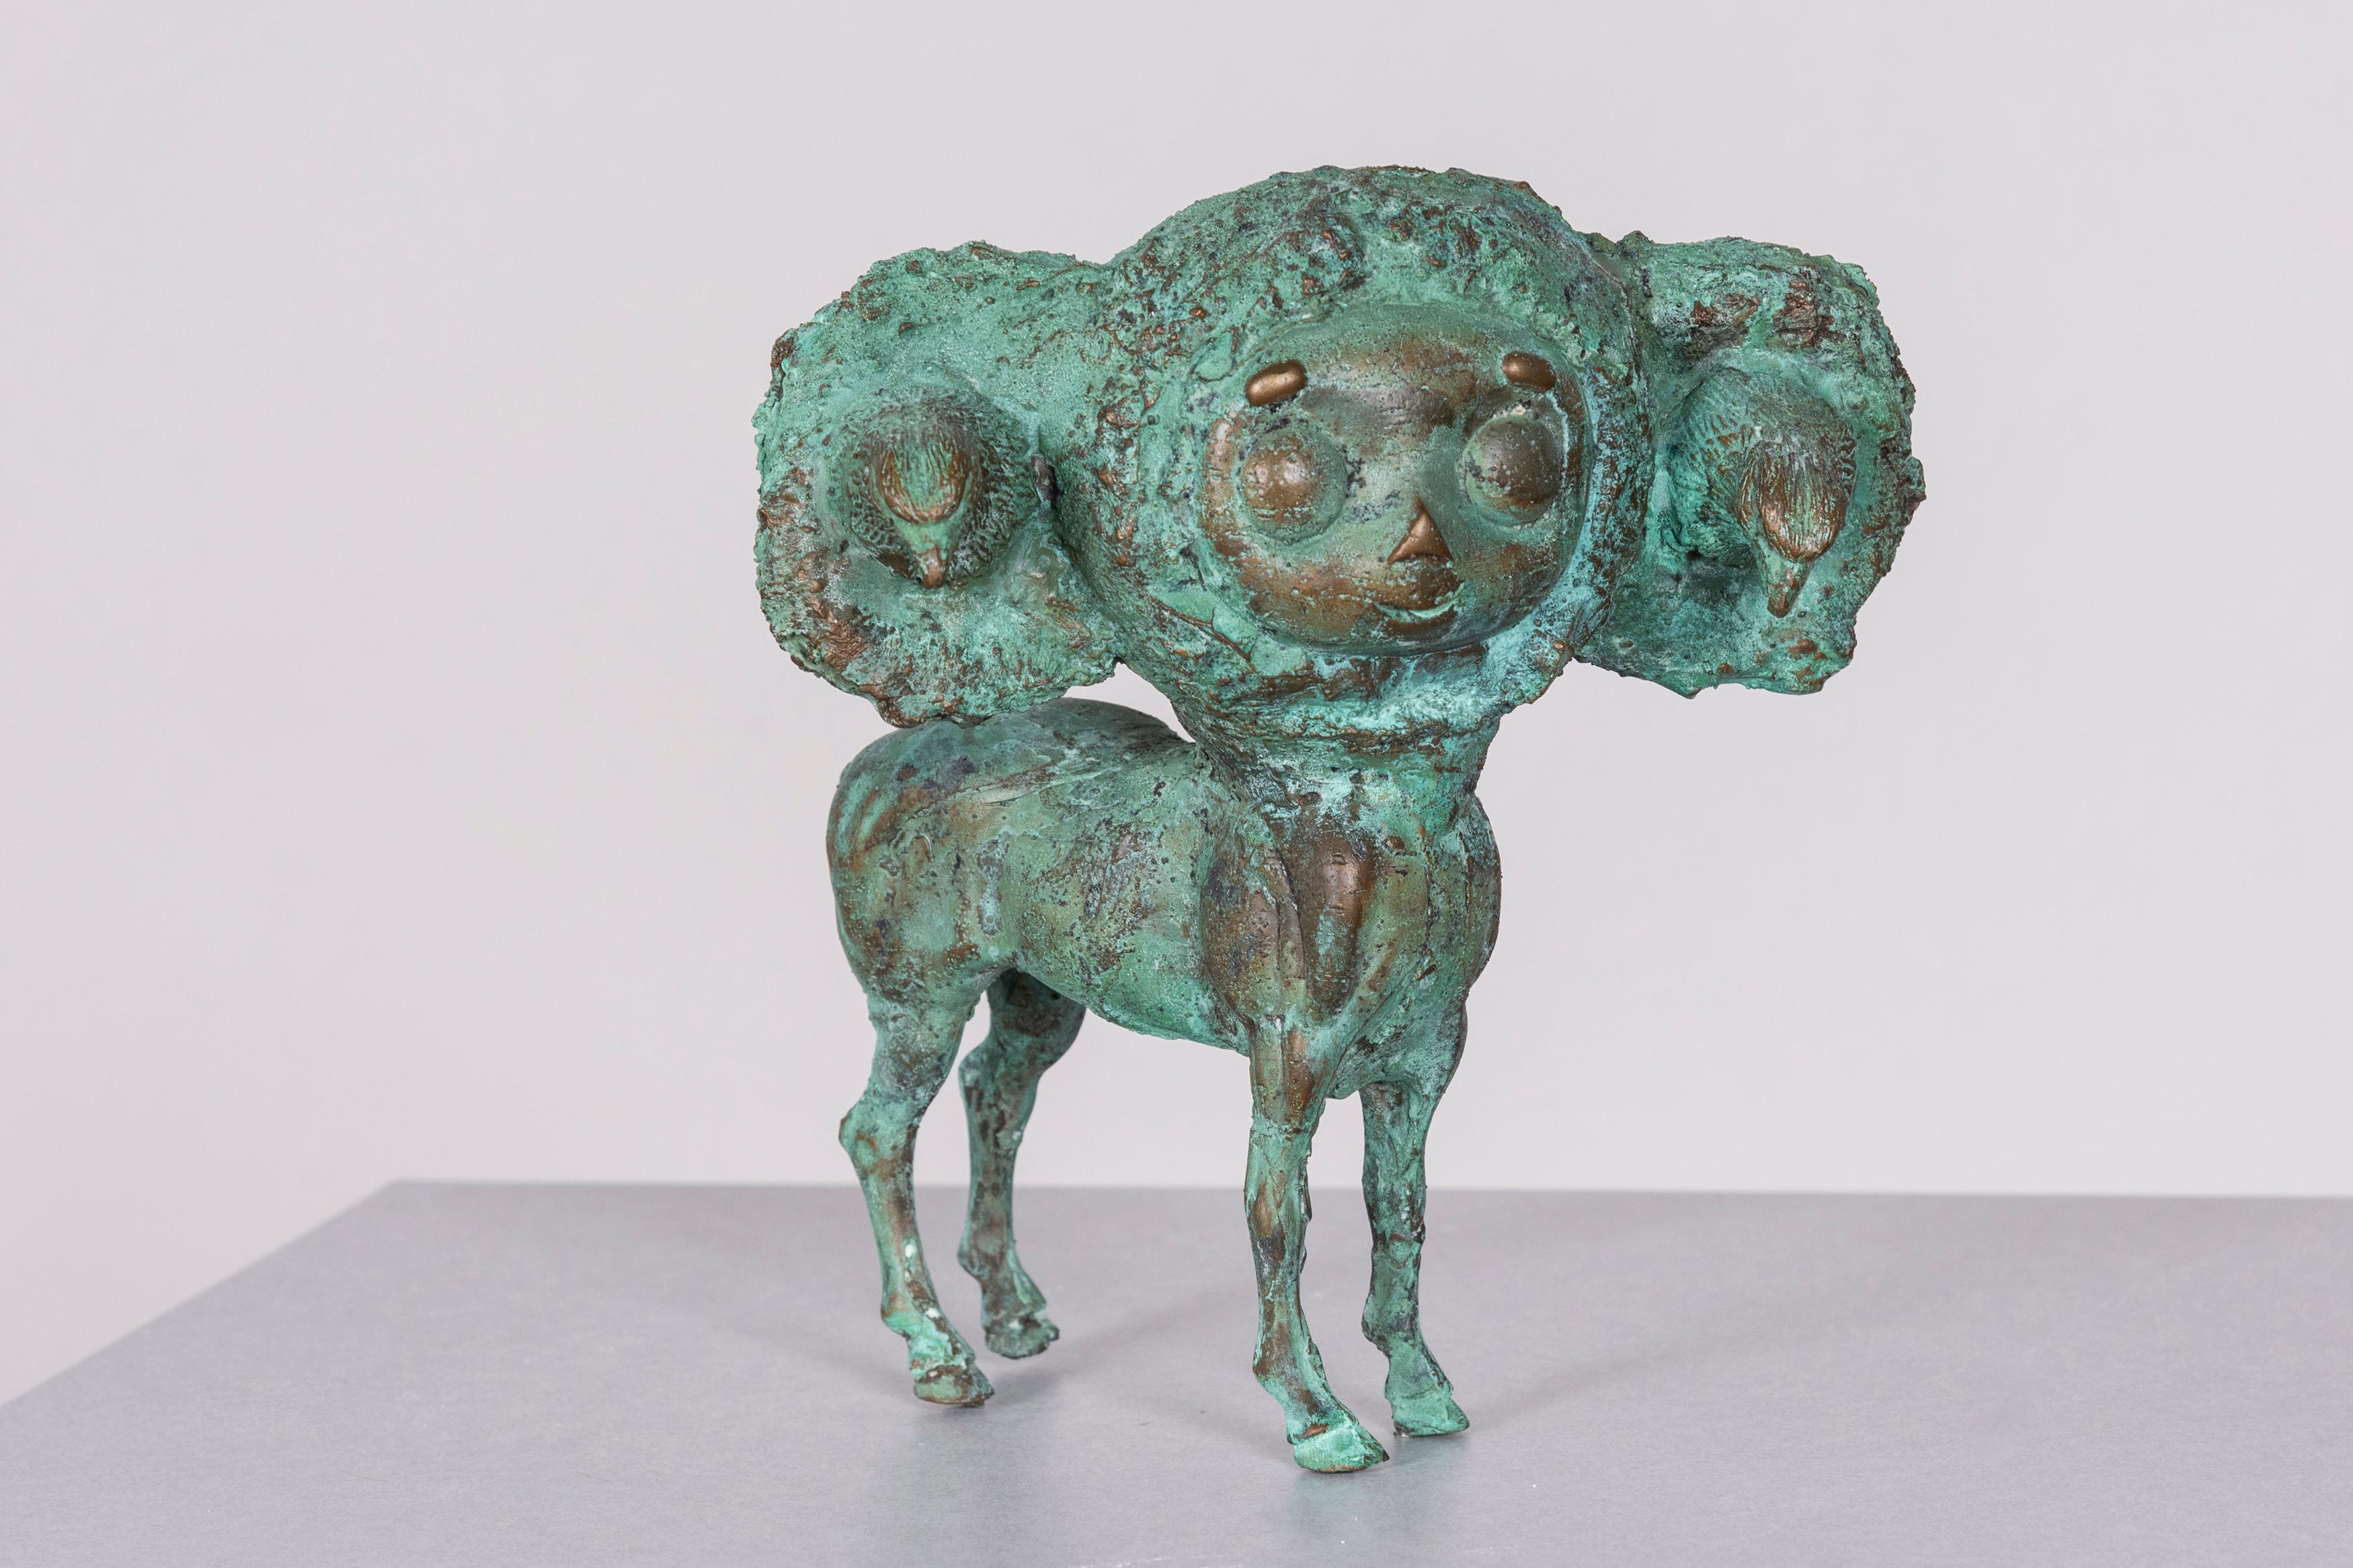 Figurative Sculpture Joshua Goode - Culture populaire, sculpture en bronze : le Chupacabra